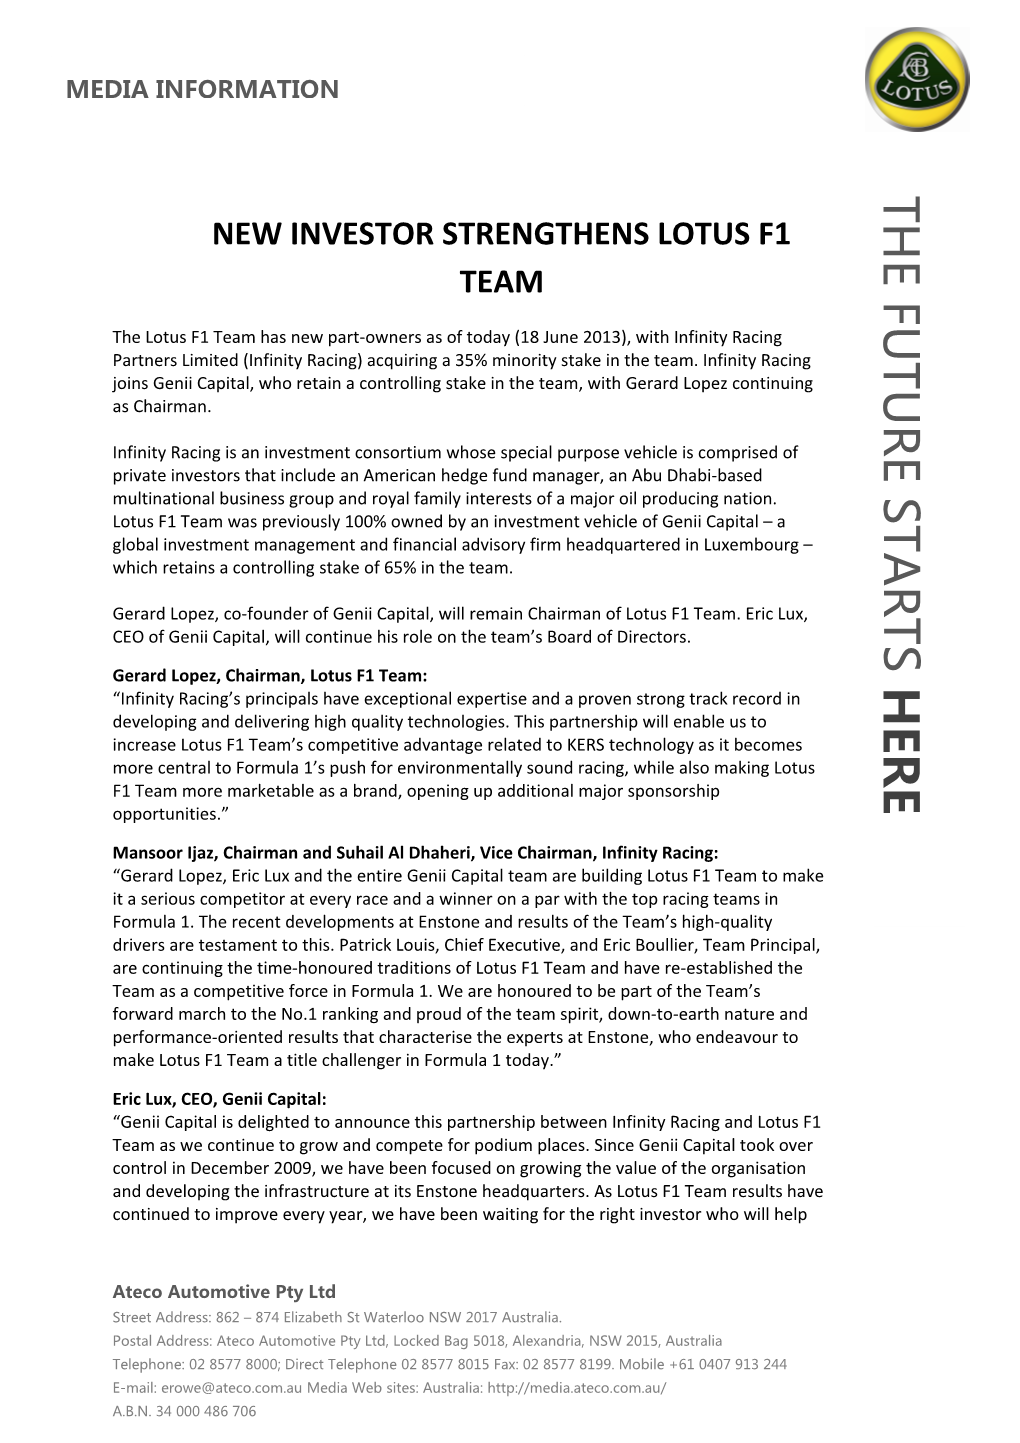 New Investor Strengthens Lotus F1 Team